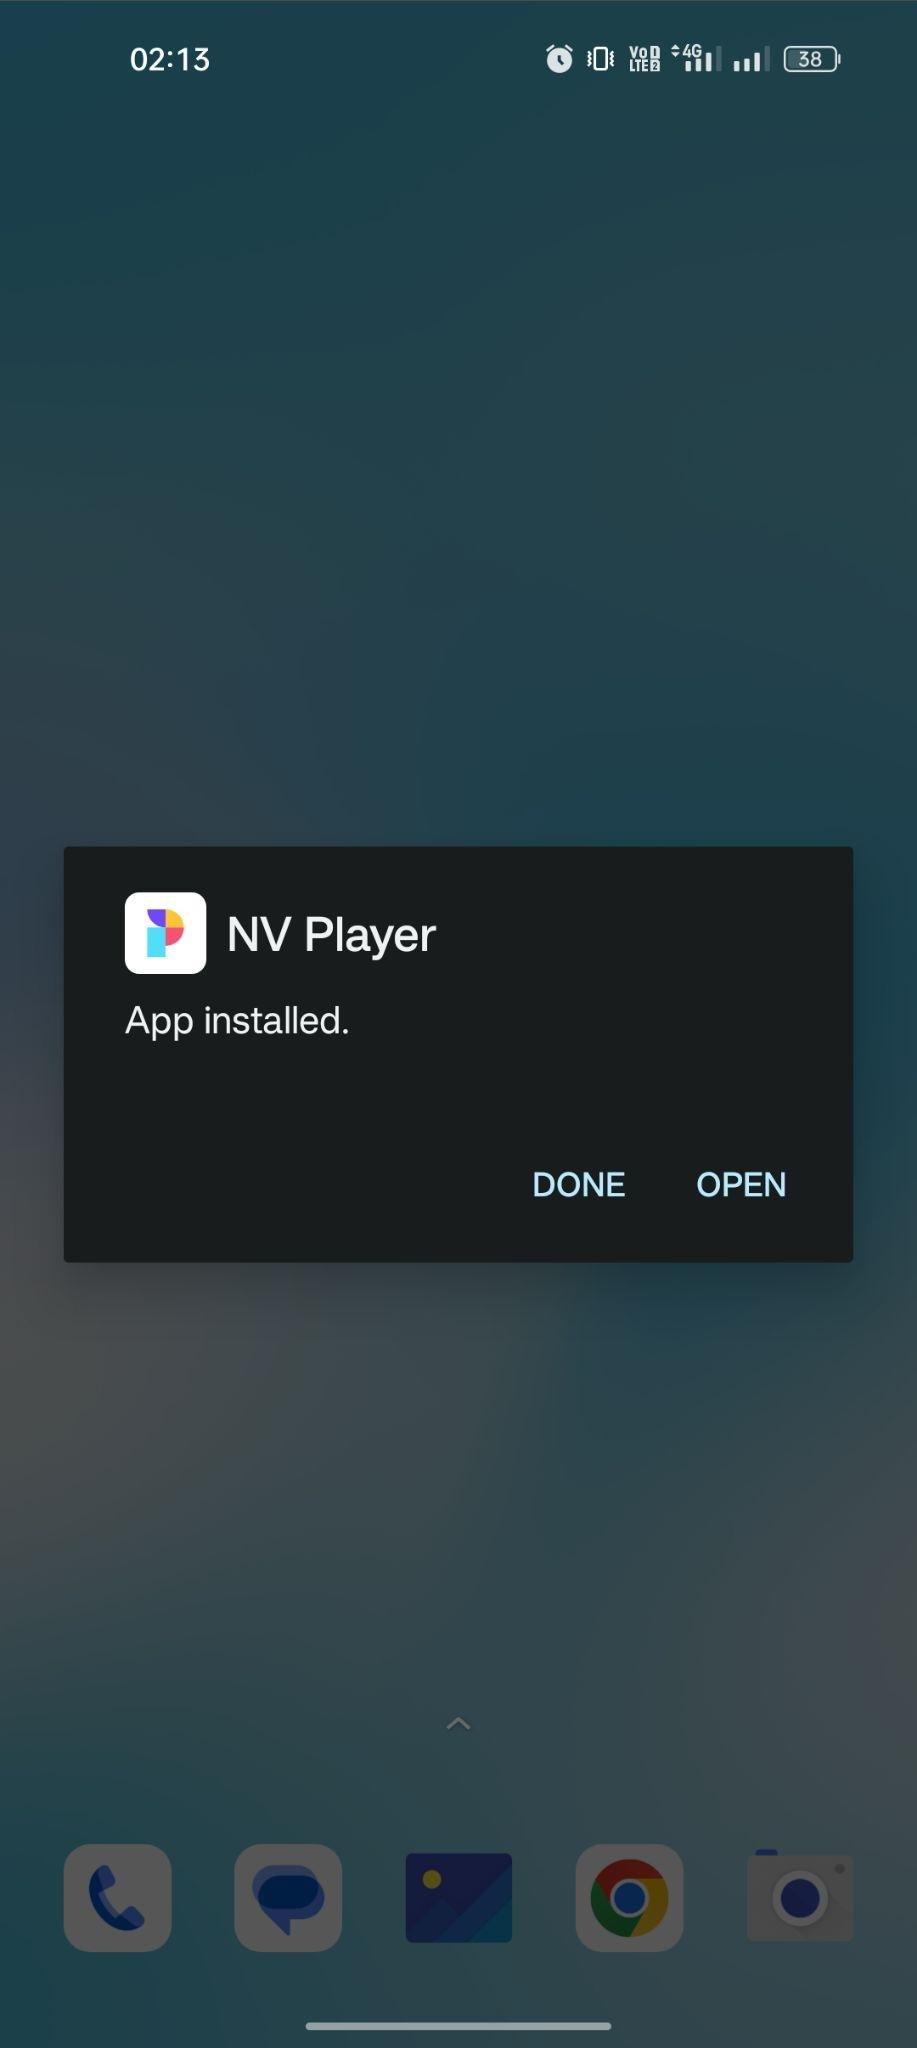 NVPlayer apk installed